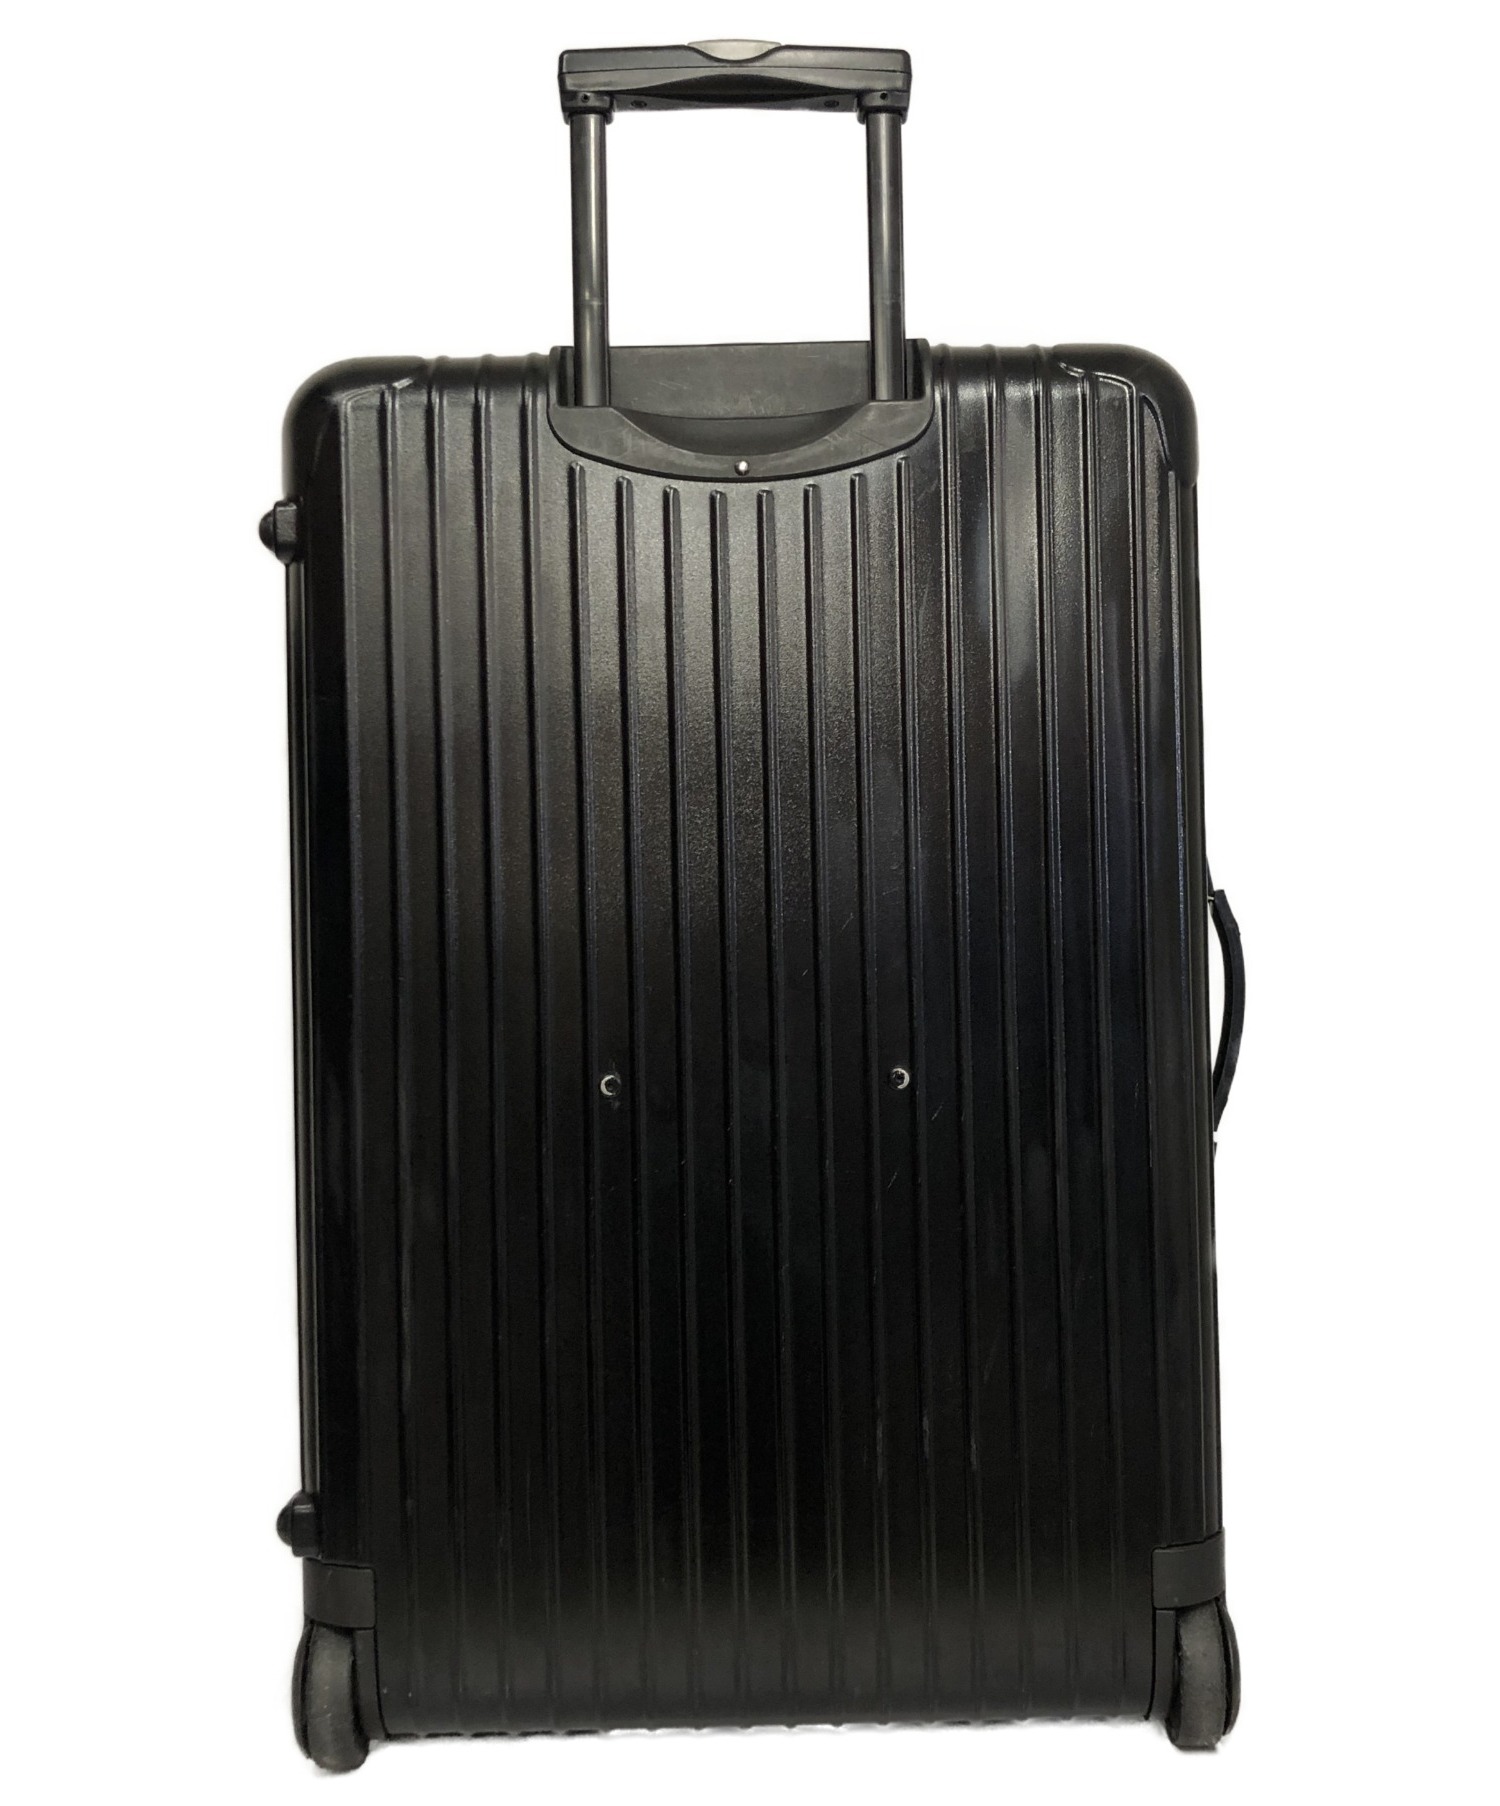 RIMOWA (リモワ) スーツケース ブラック SALSA 廃版モデル 2輪タイプ 約60L